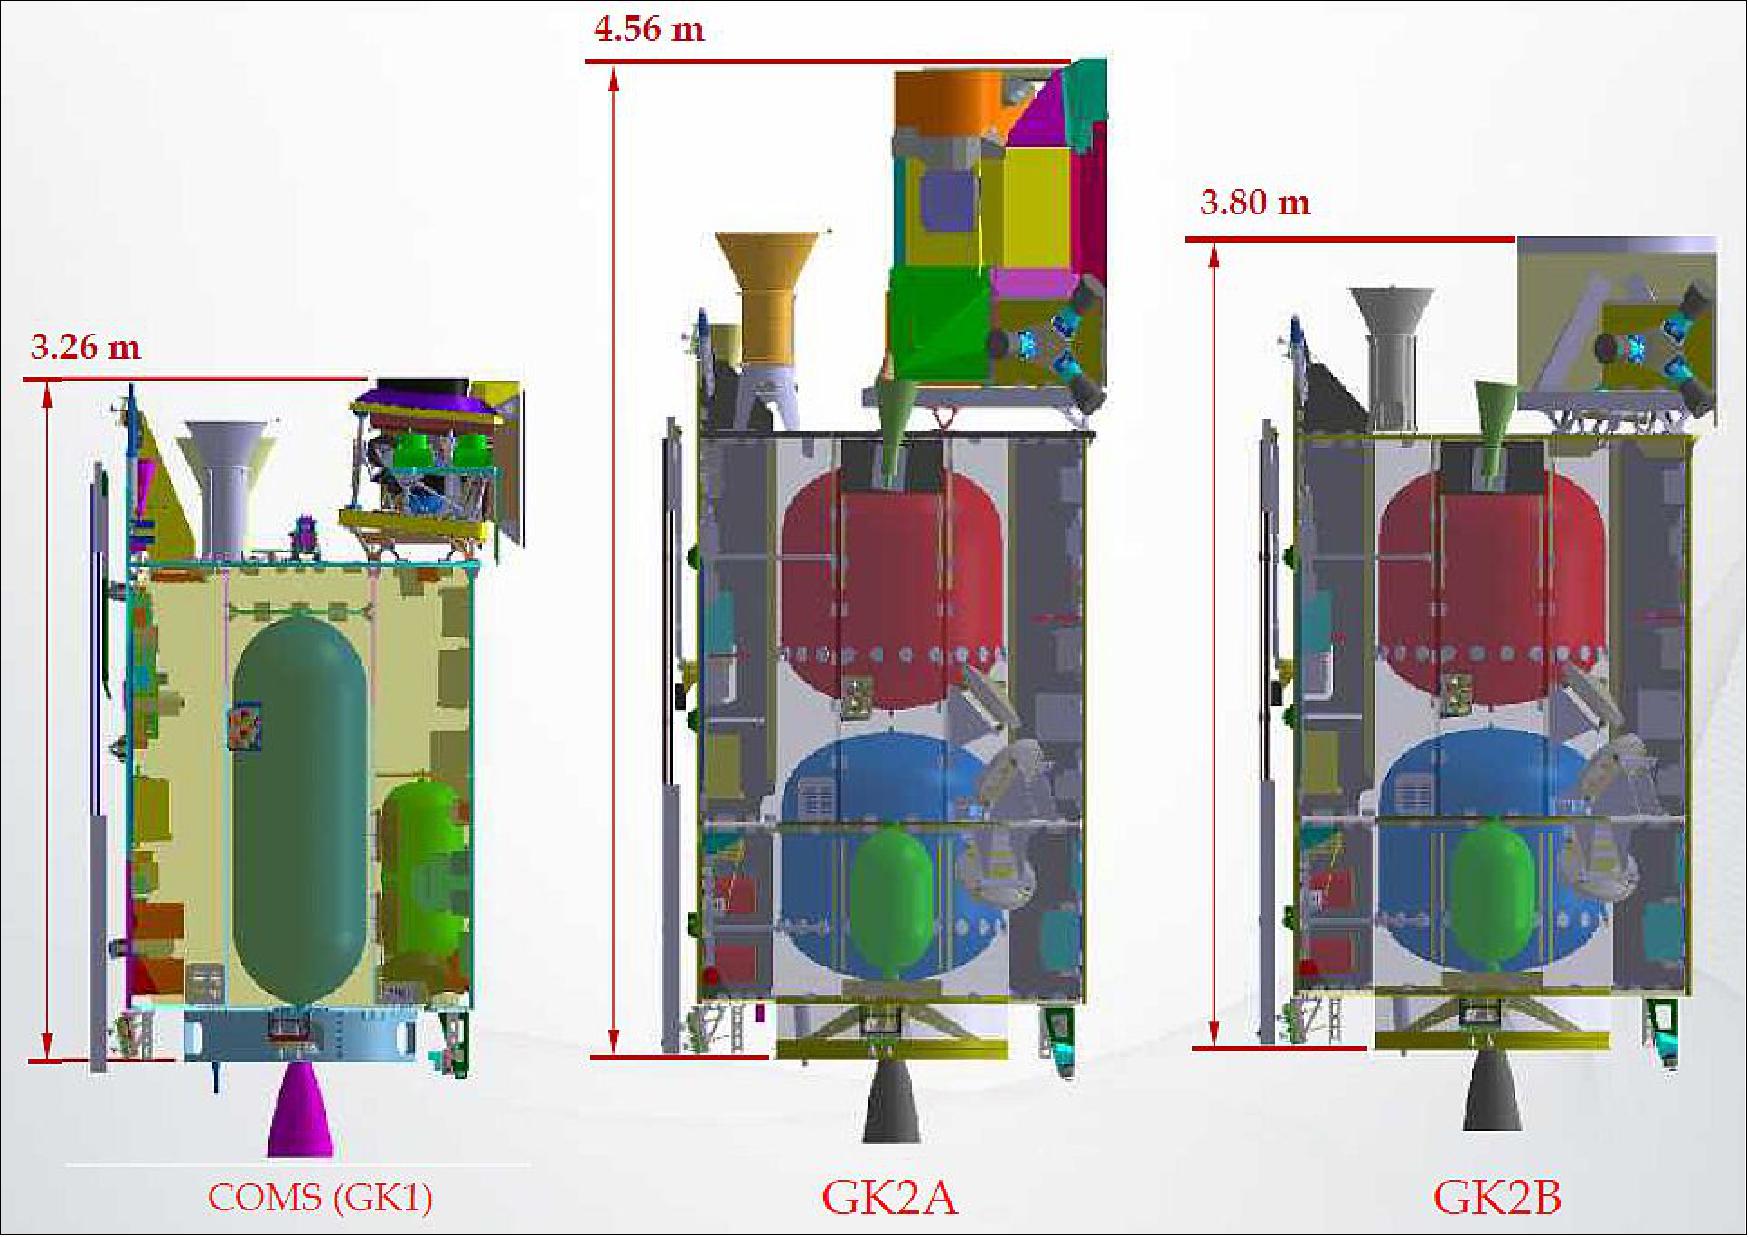 Figure 8: Illustration of the COMS (GK1) spacecraft versus the GK2 spacecraft configurations (image credit: KARI, Ref. 6)